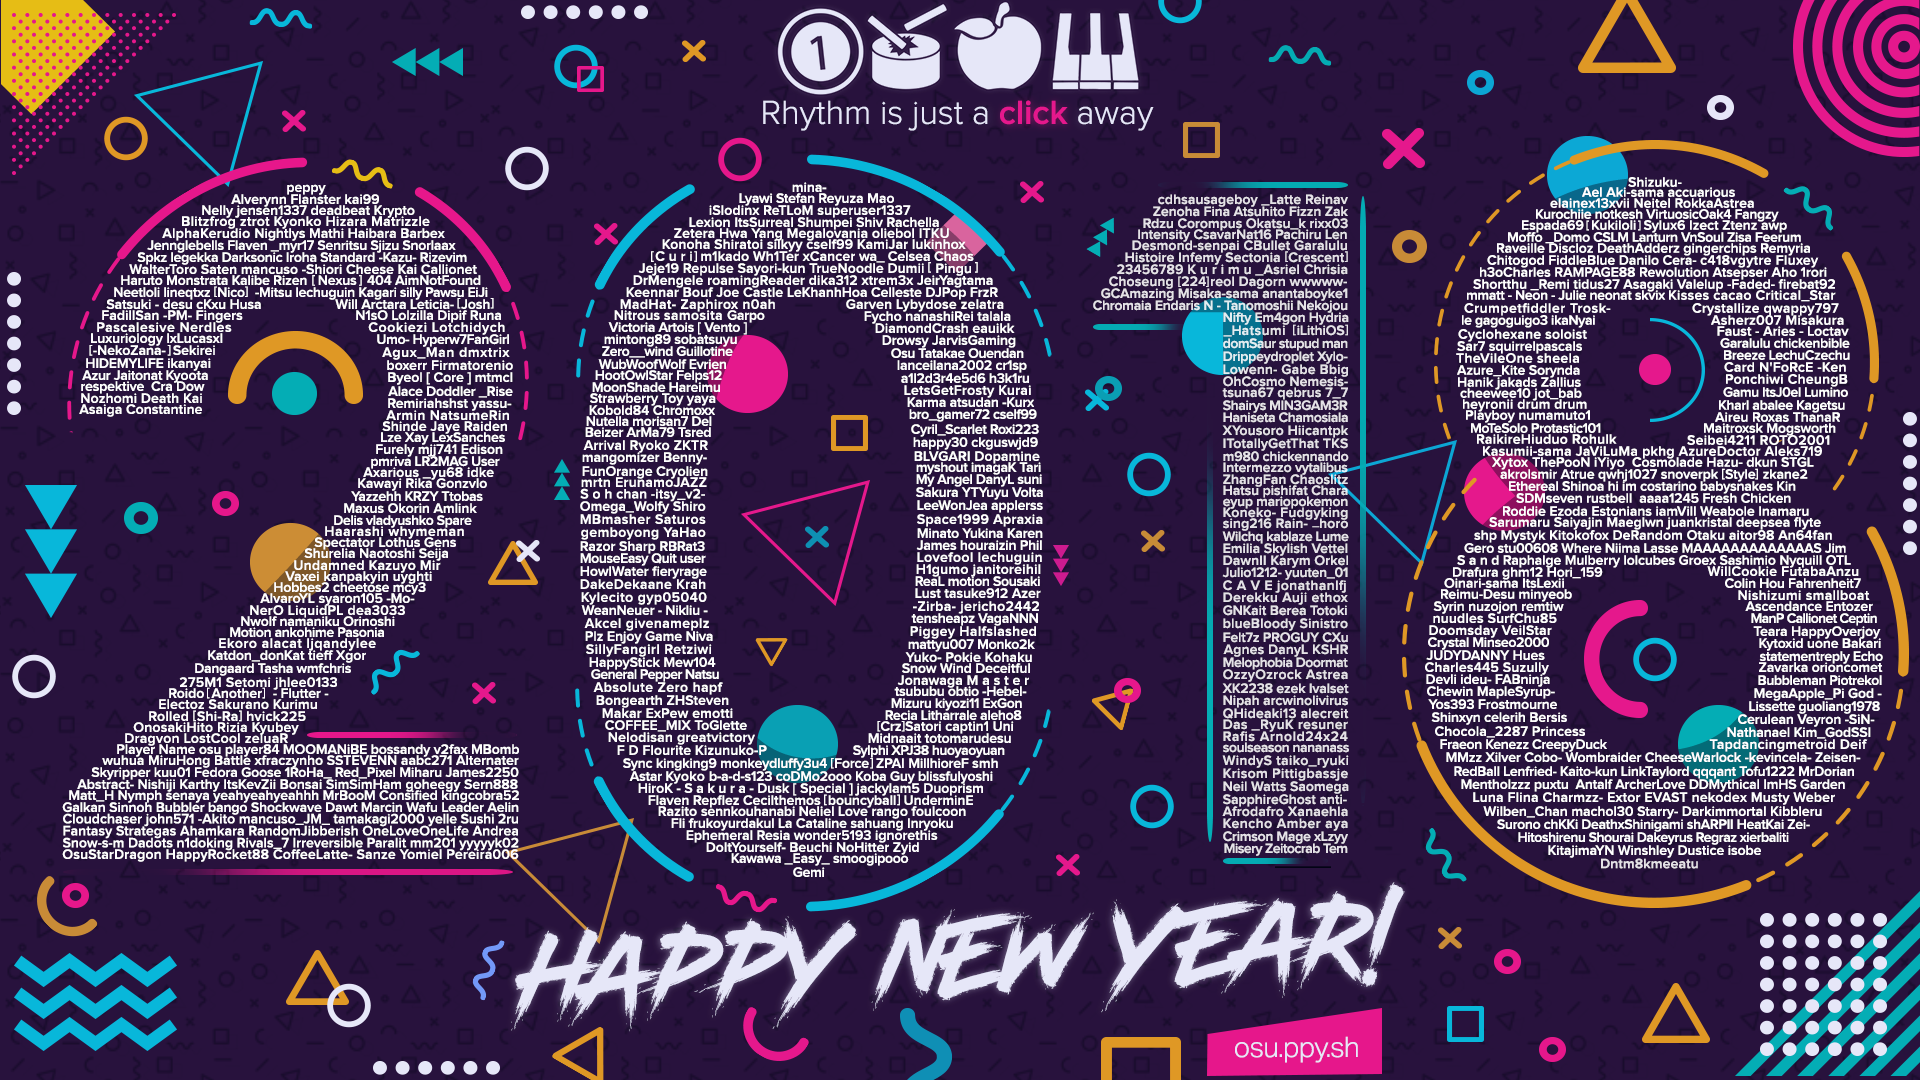 osu! 2018 New Year Wallpaper (HAPPY NEW